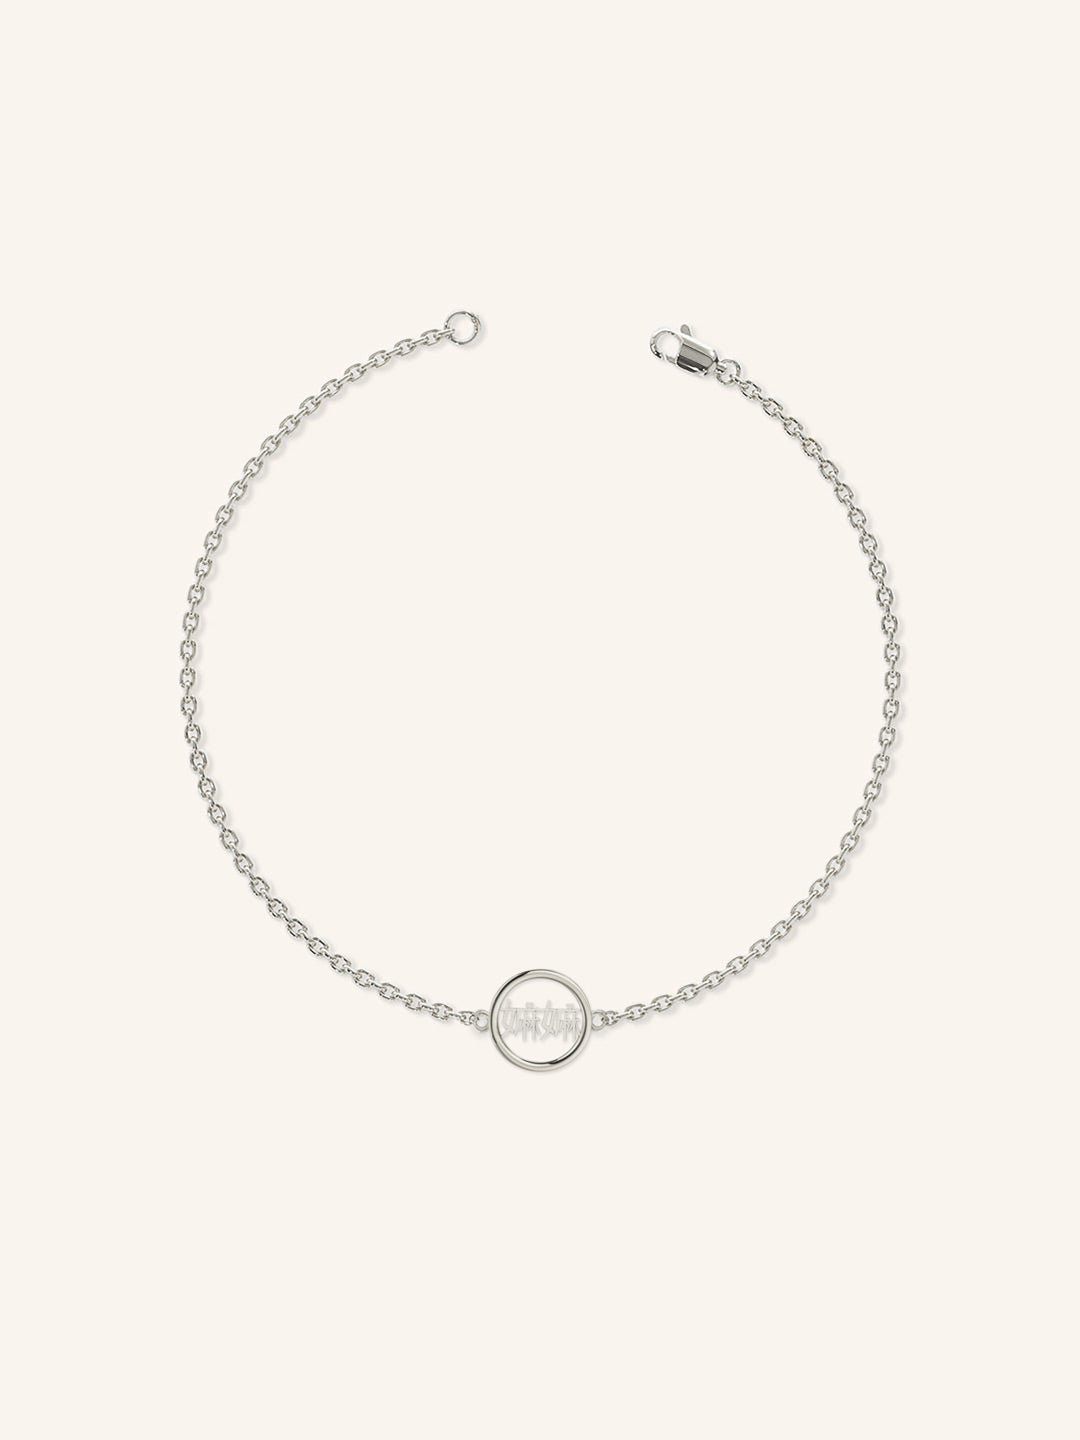 Chinese Ma Ma “Grandma” 嫲嫲 Bracelet